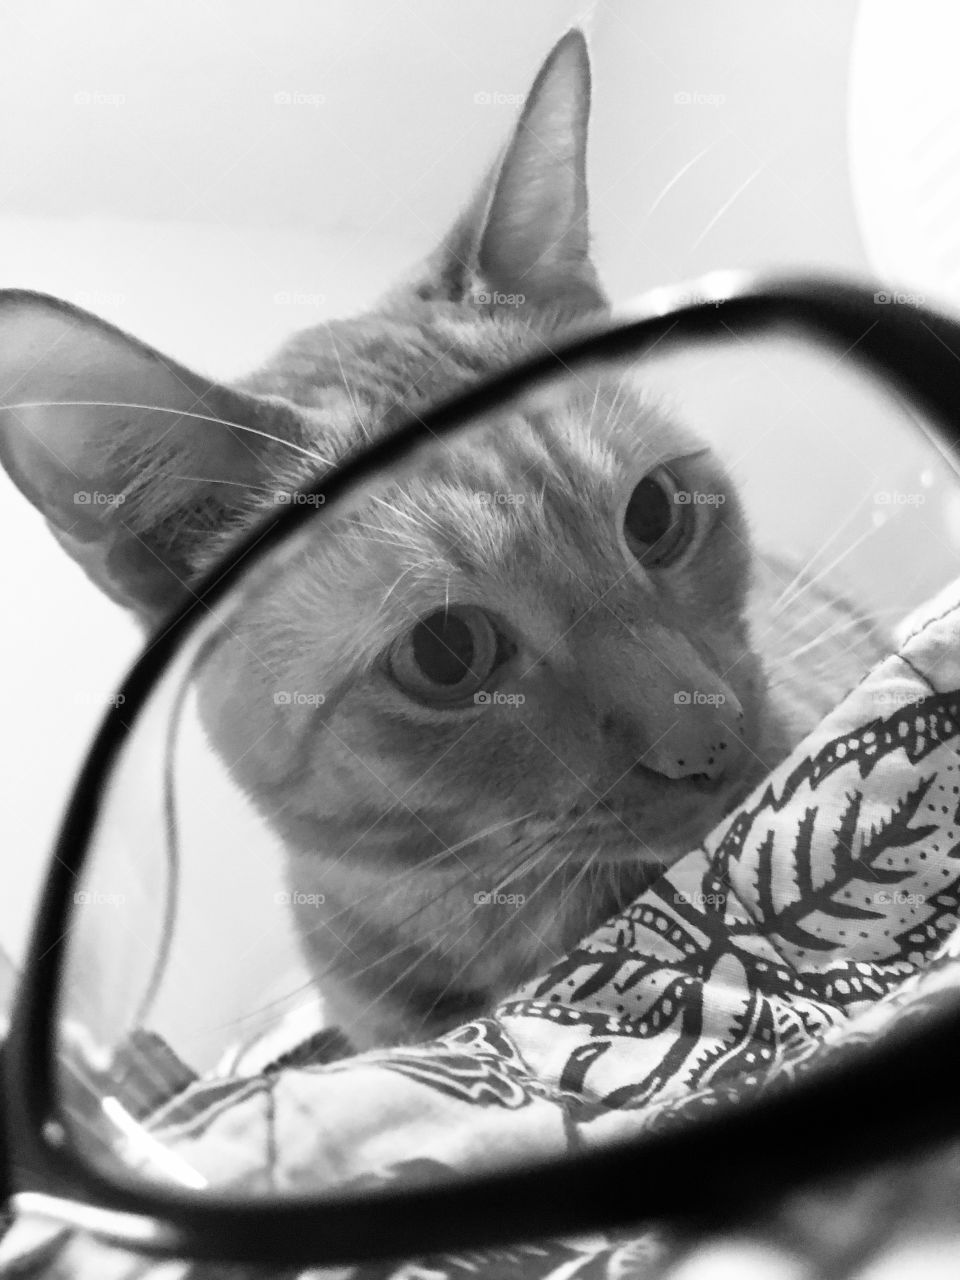 kitty through black glasses 👓